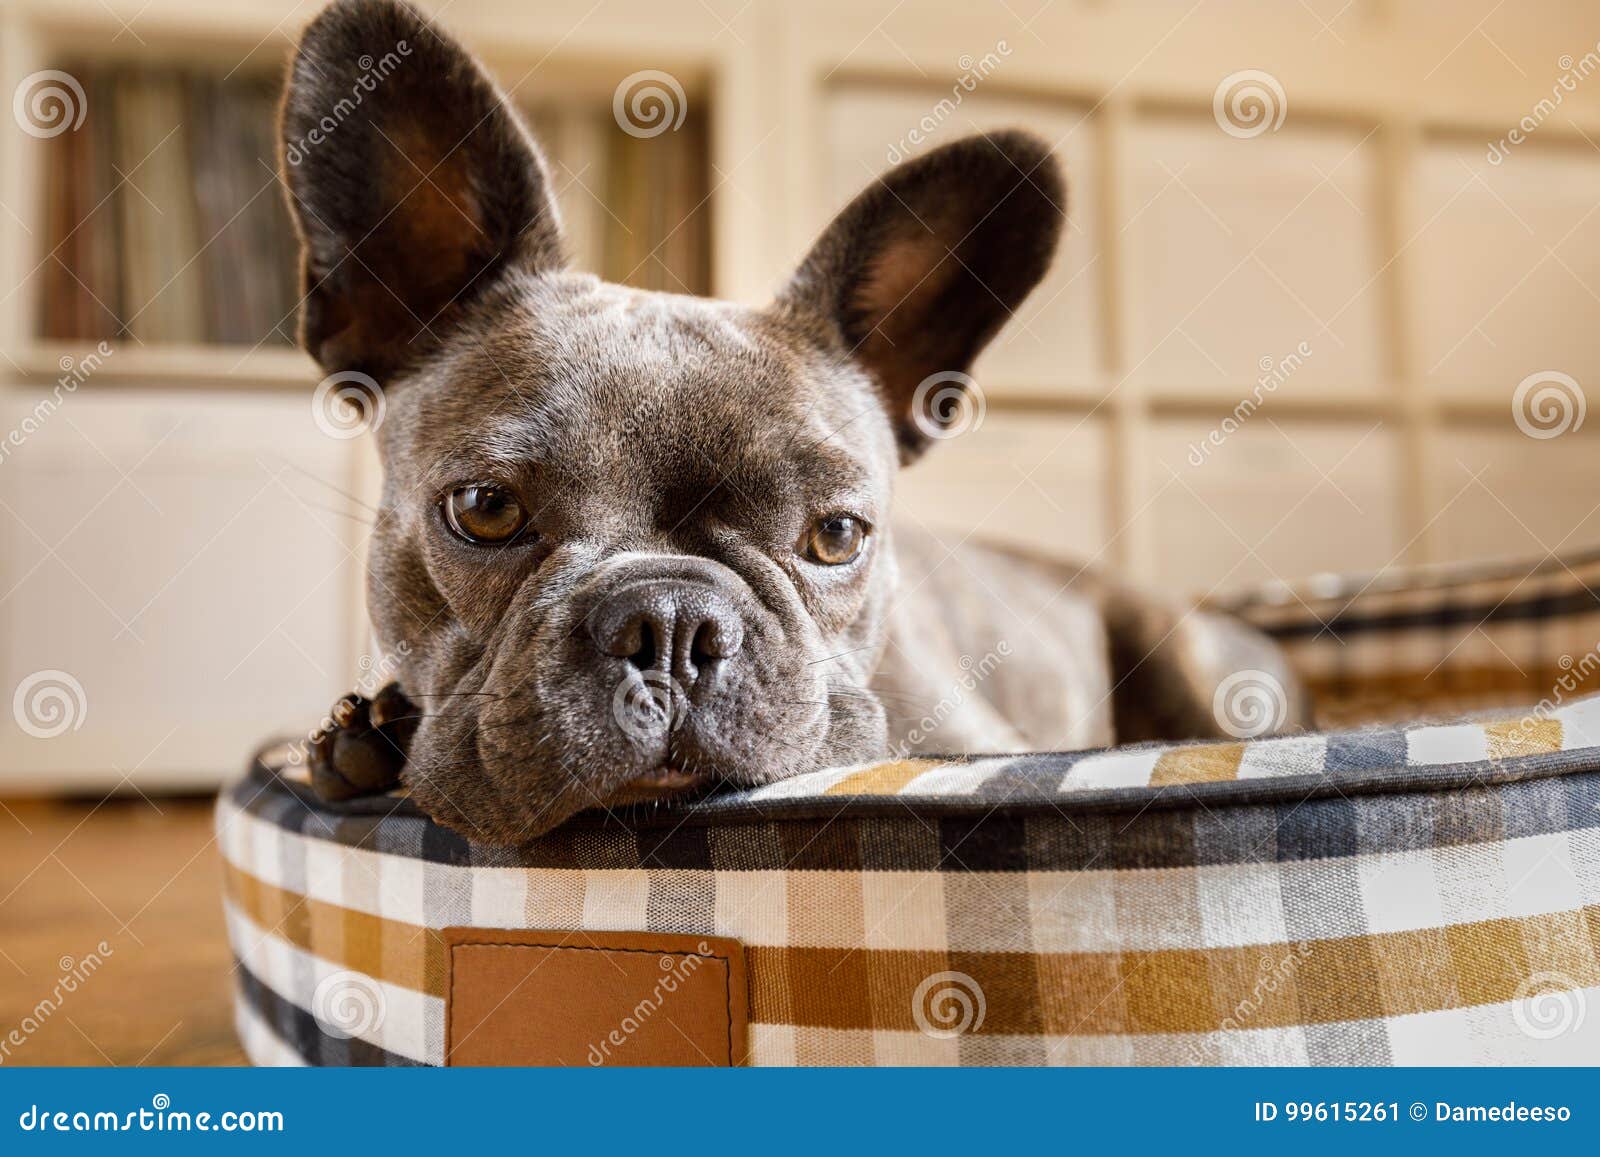 french-bulldog-dog-relaxing-living-room-